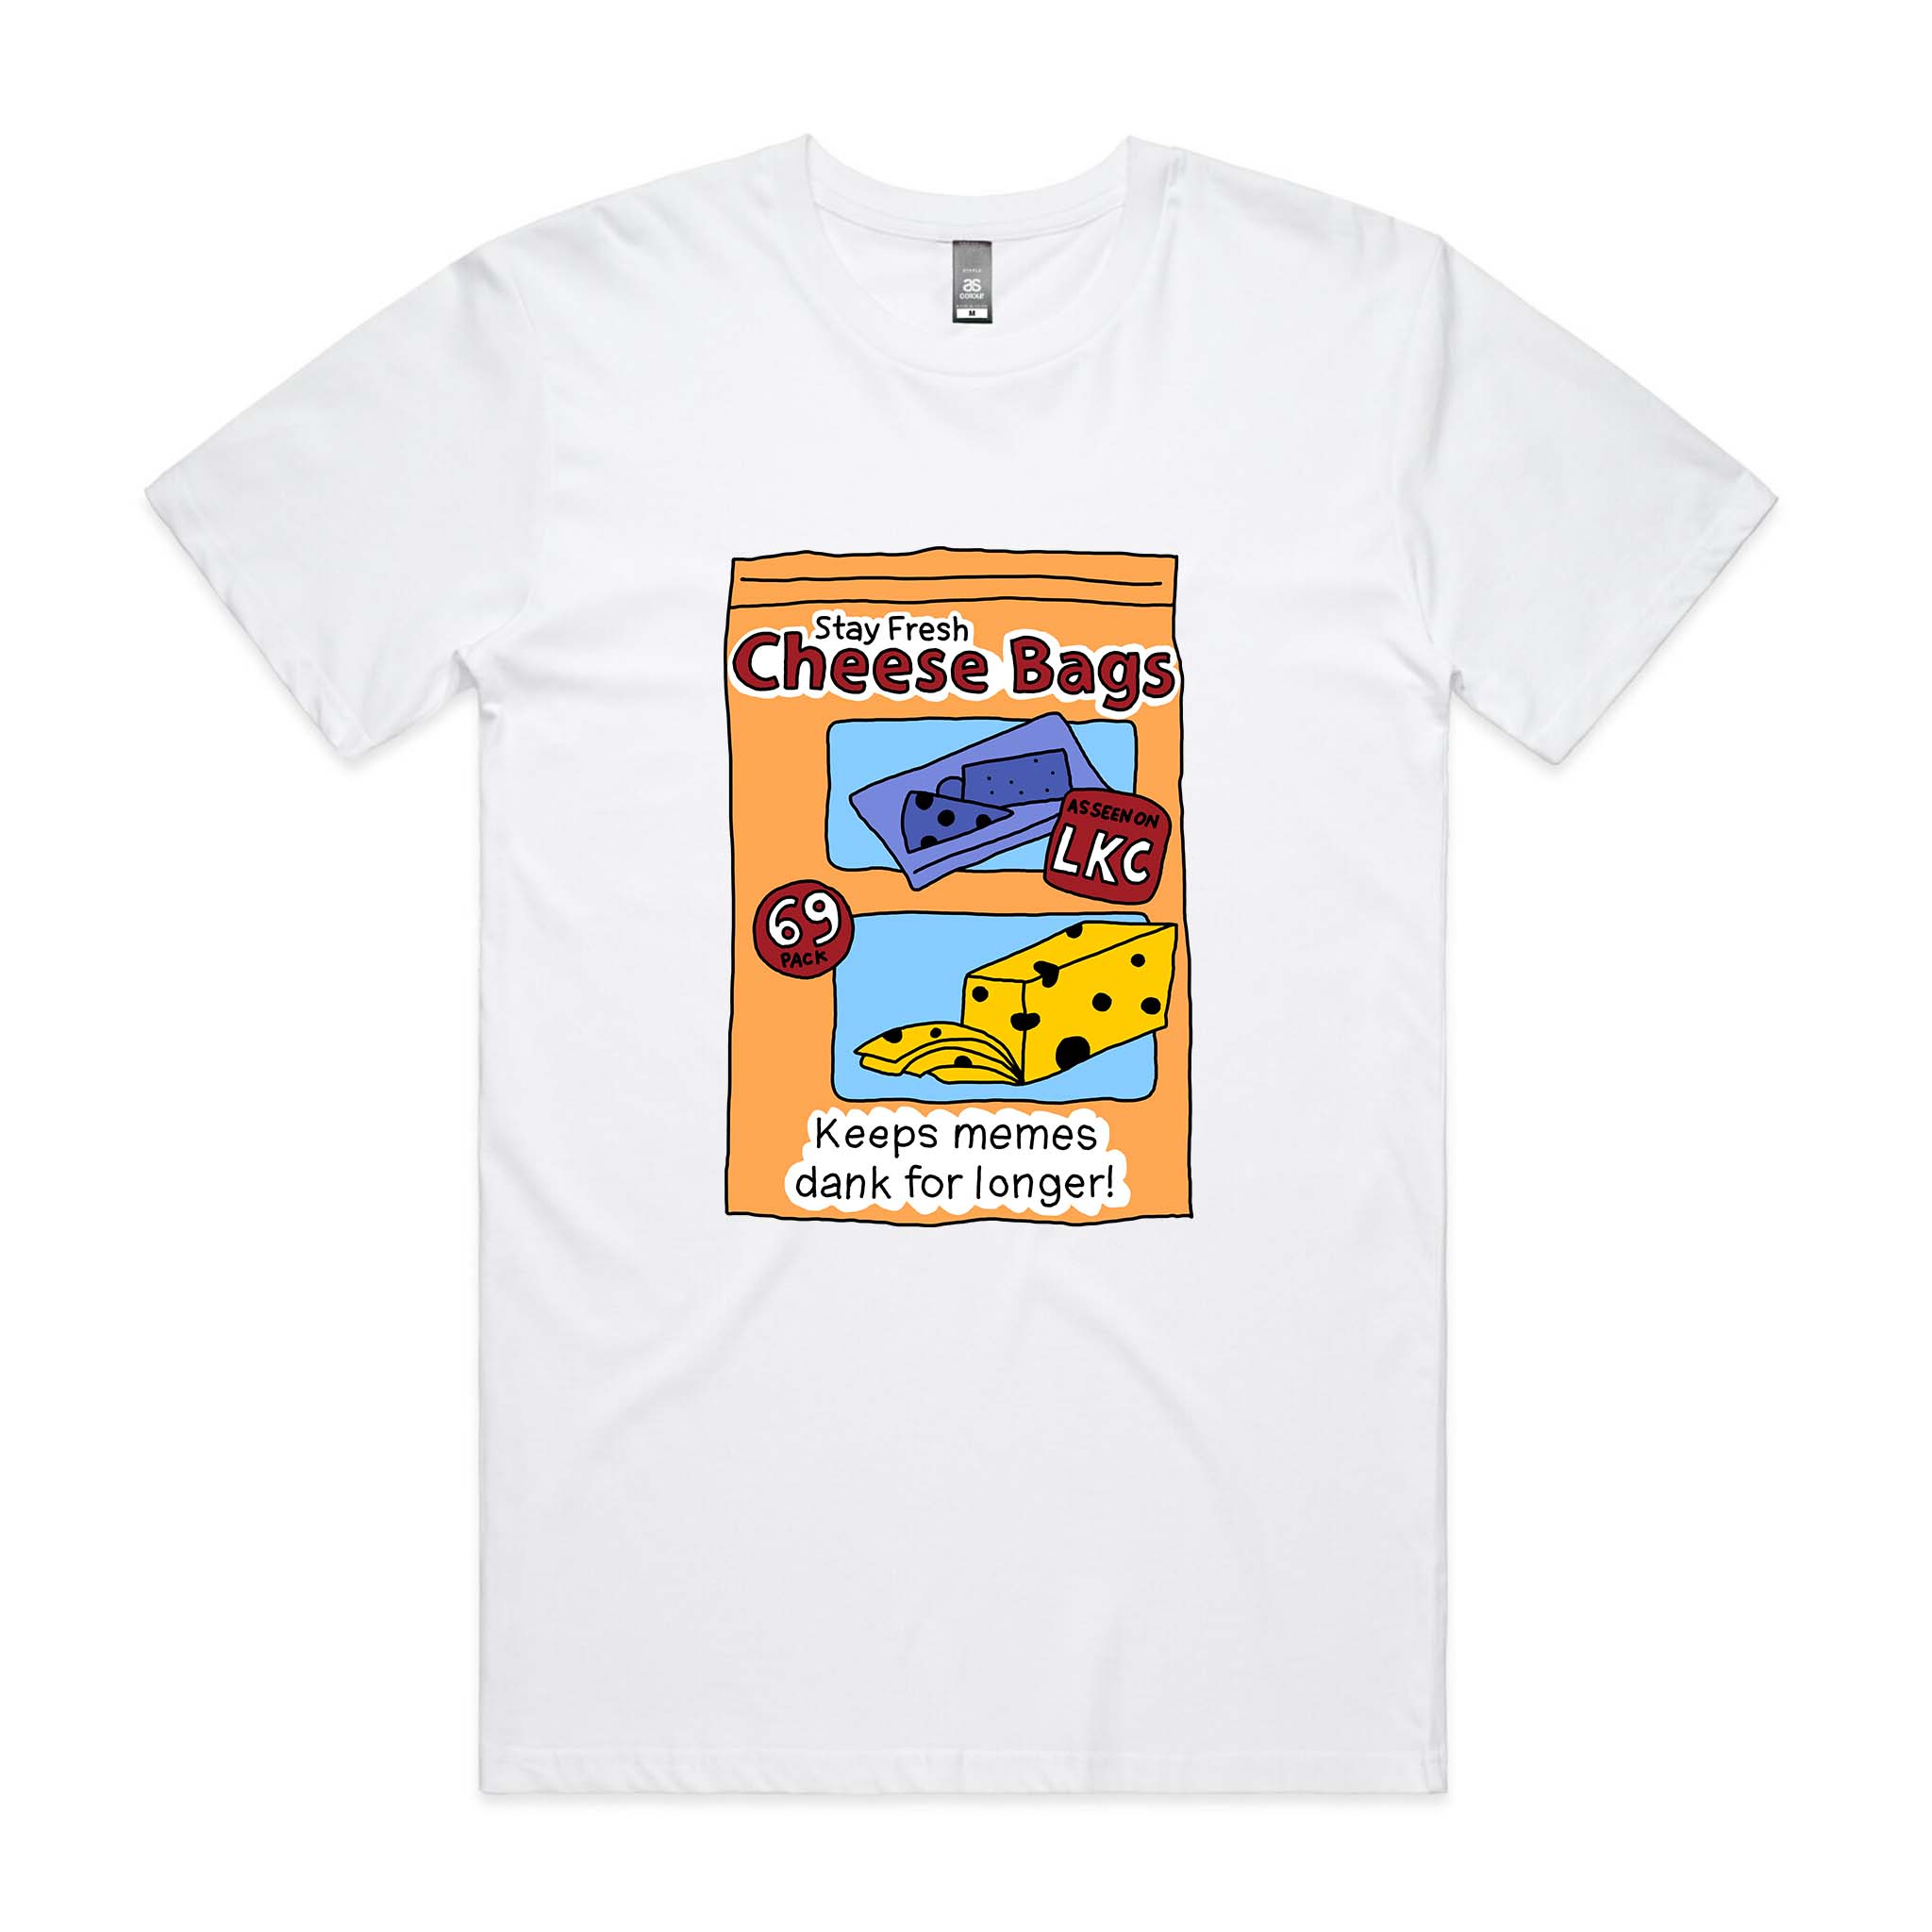 Stay Fresh Cheese Bags Tee